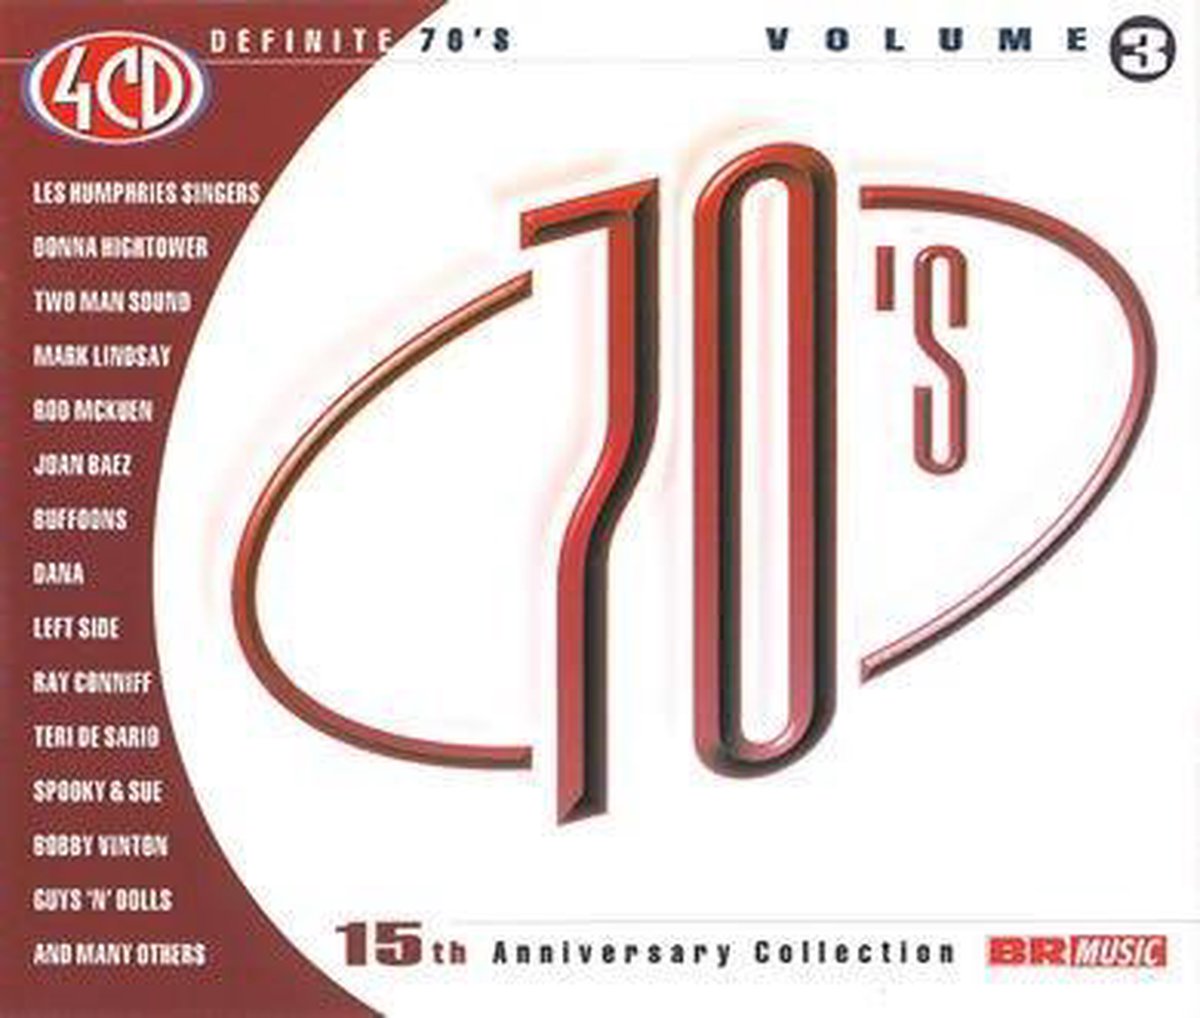 Definite 70's Vol. 3 - various artists